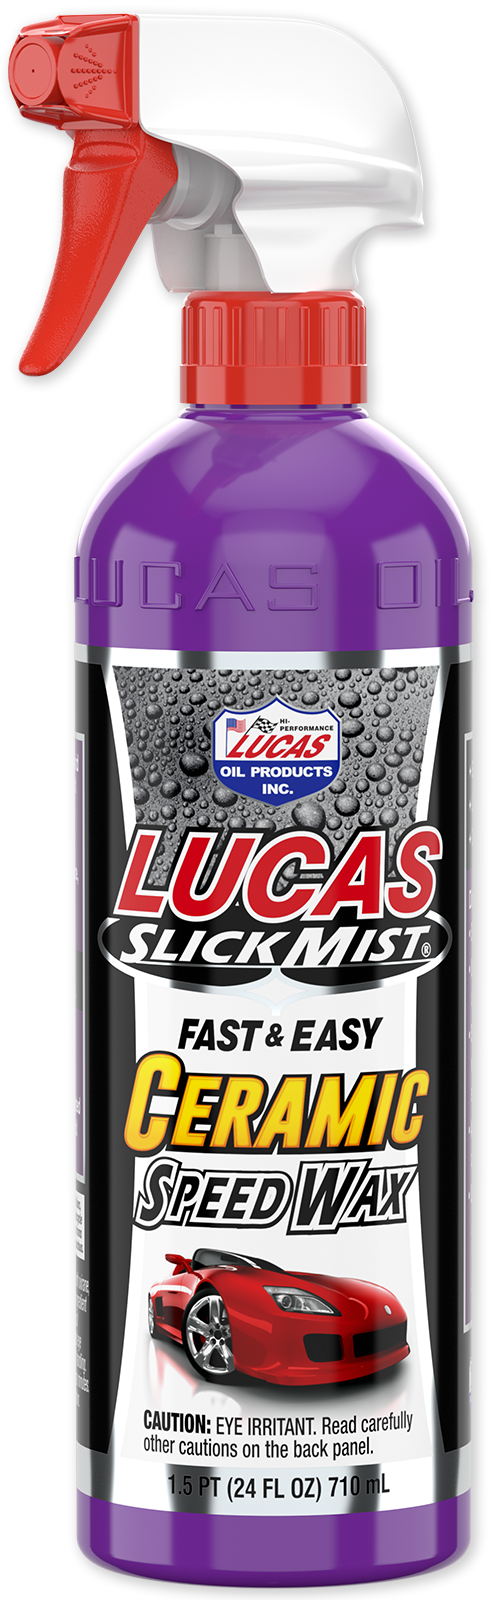 Lucas Oil 10980-12 Slick Mist Marine Speed Wax Case (12 x 24 oz), 1 Pack